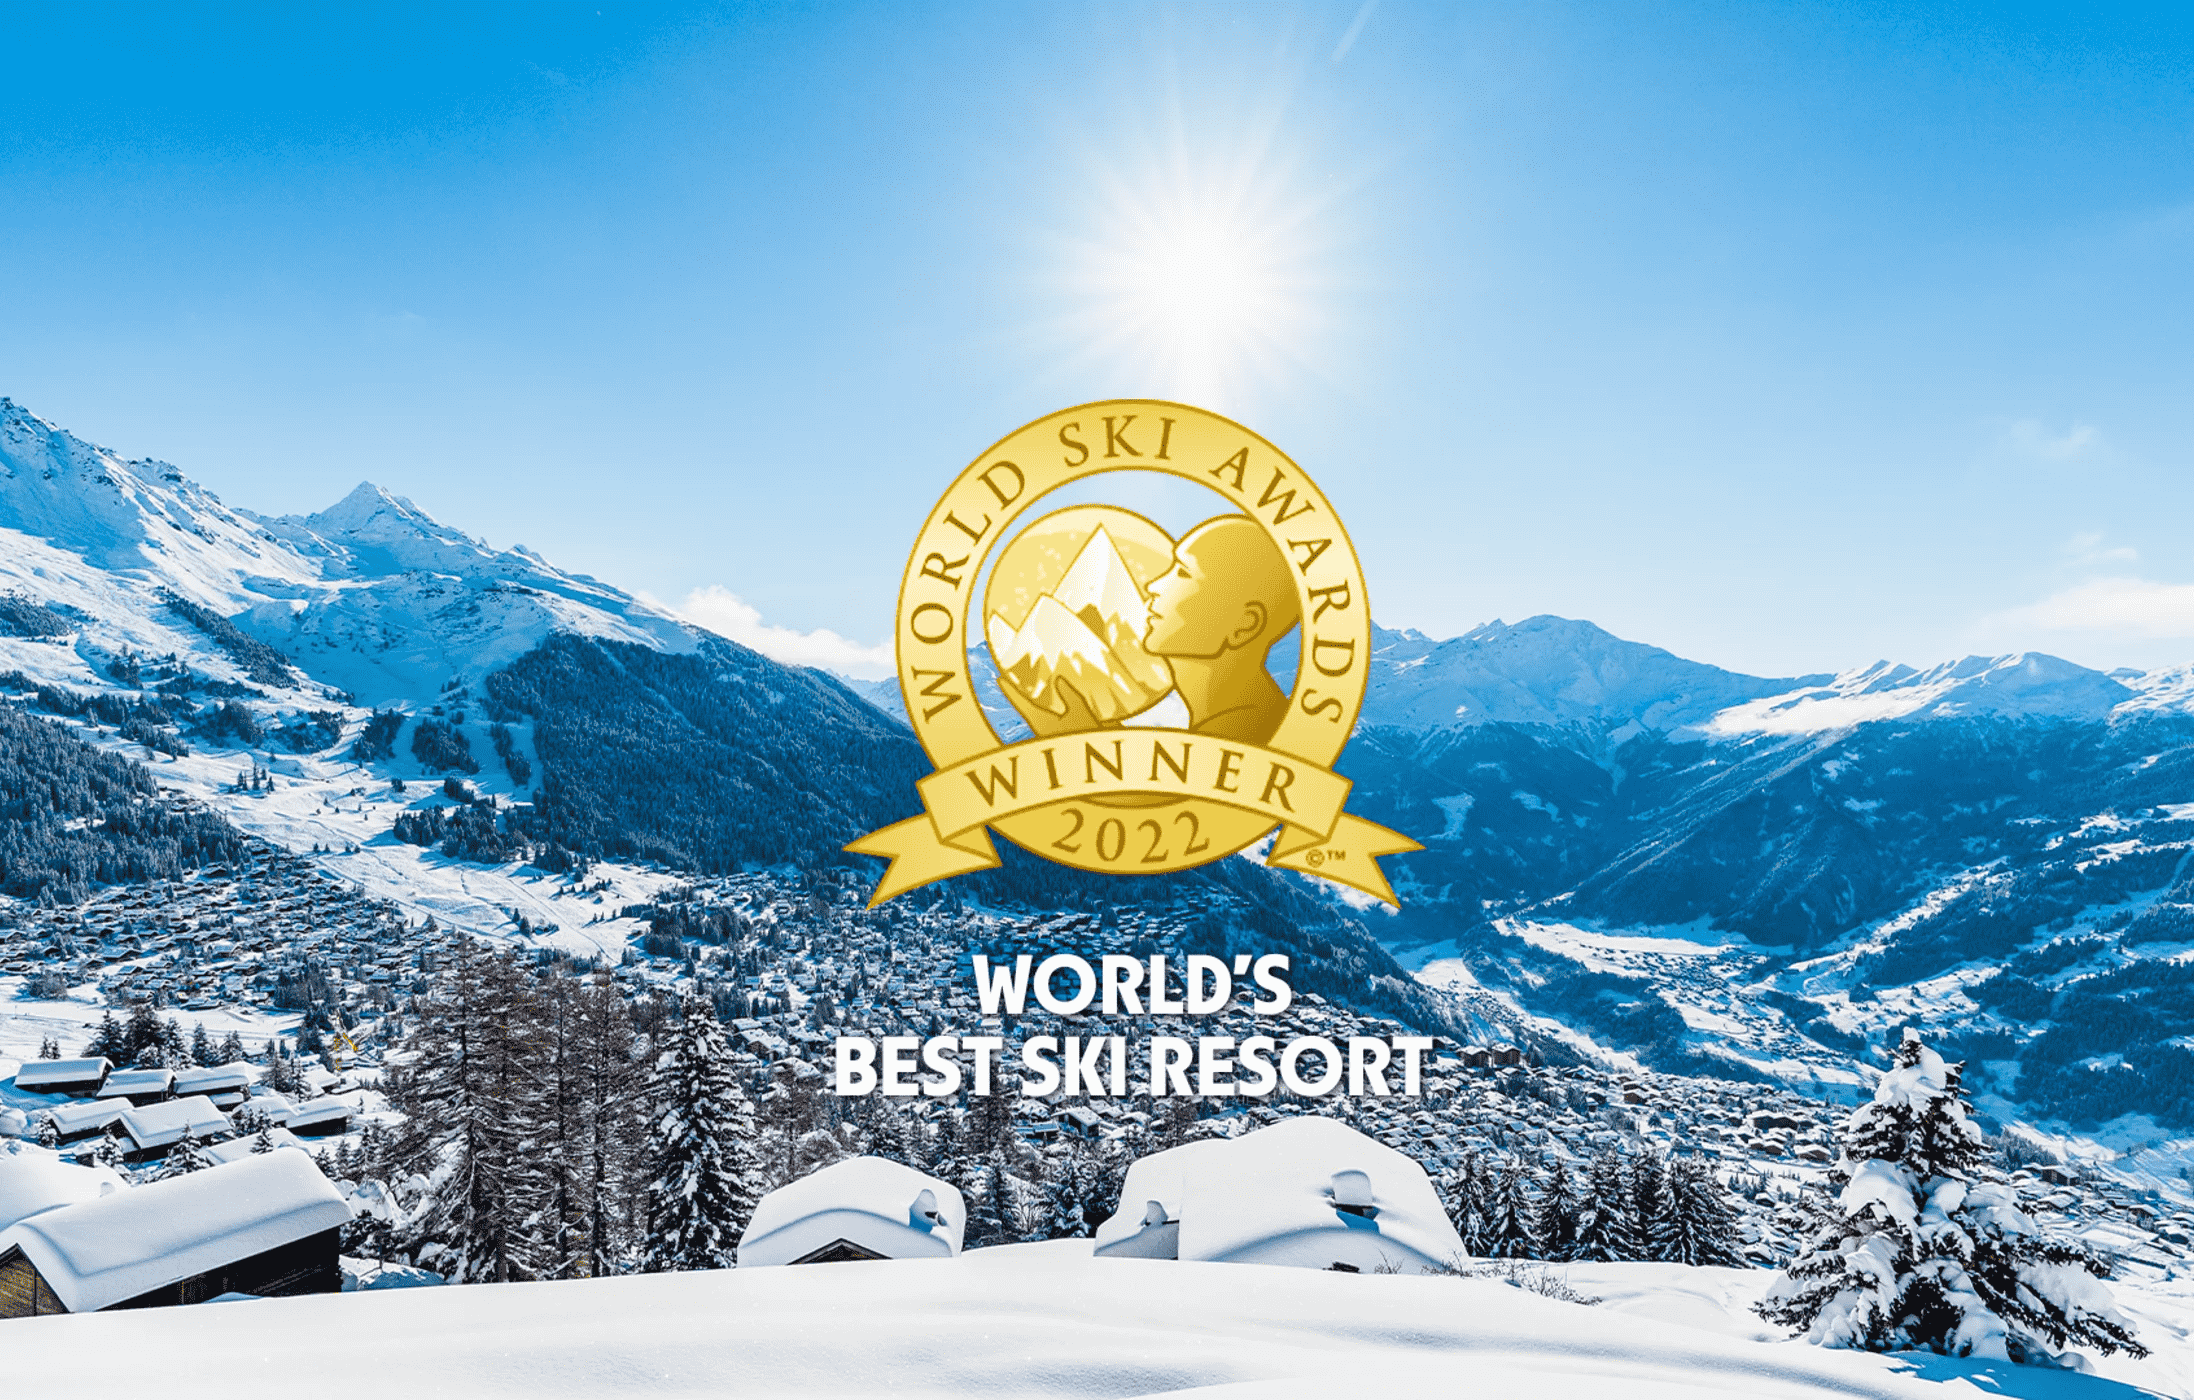 The World's Best Ski Resort